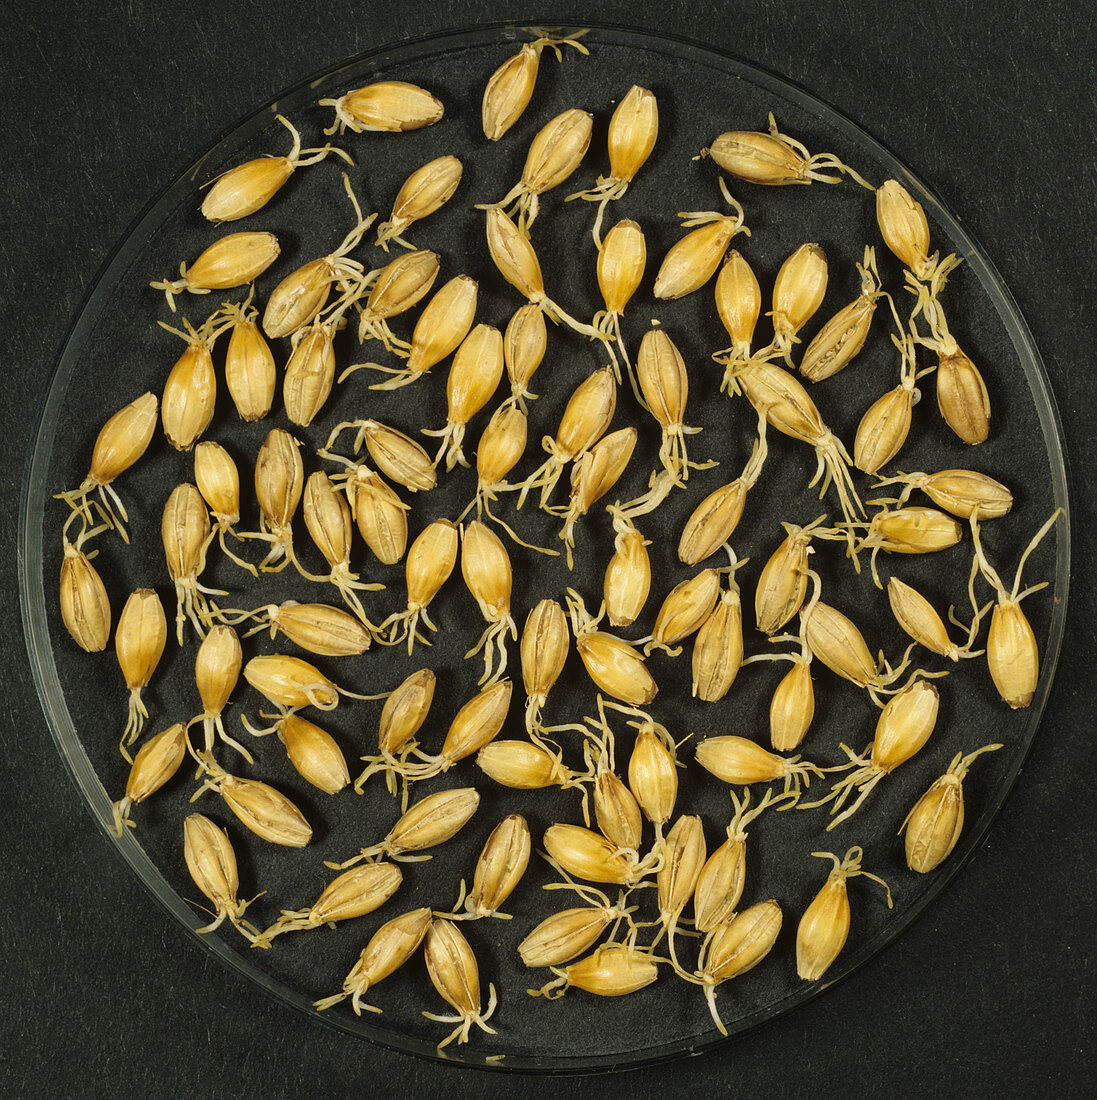 Barley malting process: drying germinated seeds